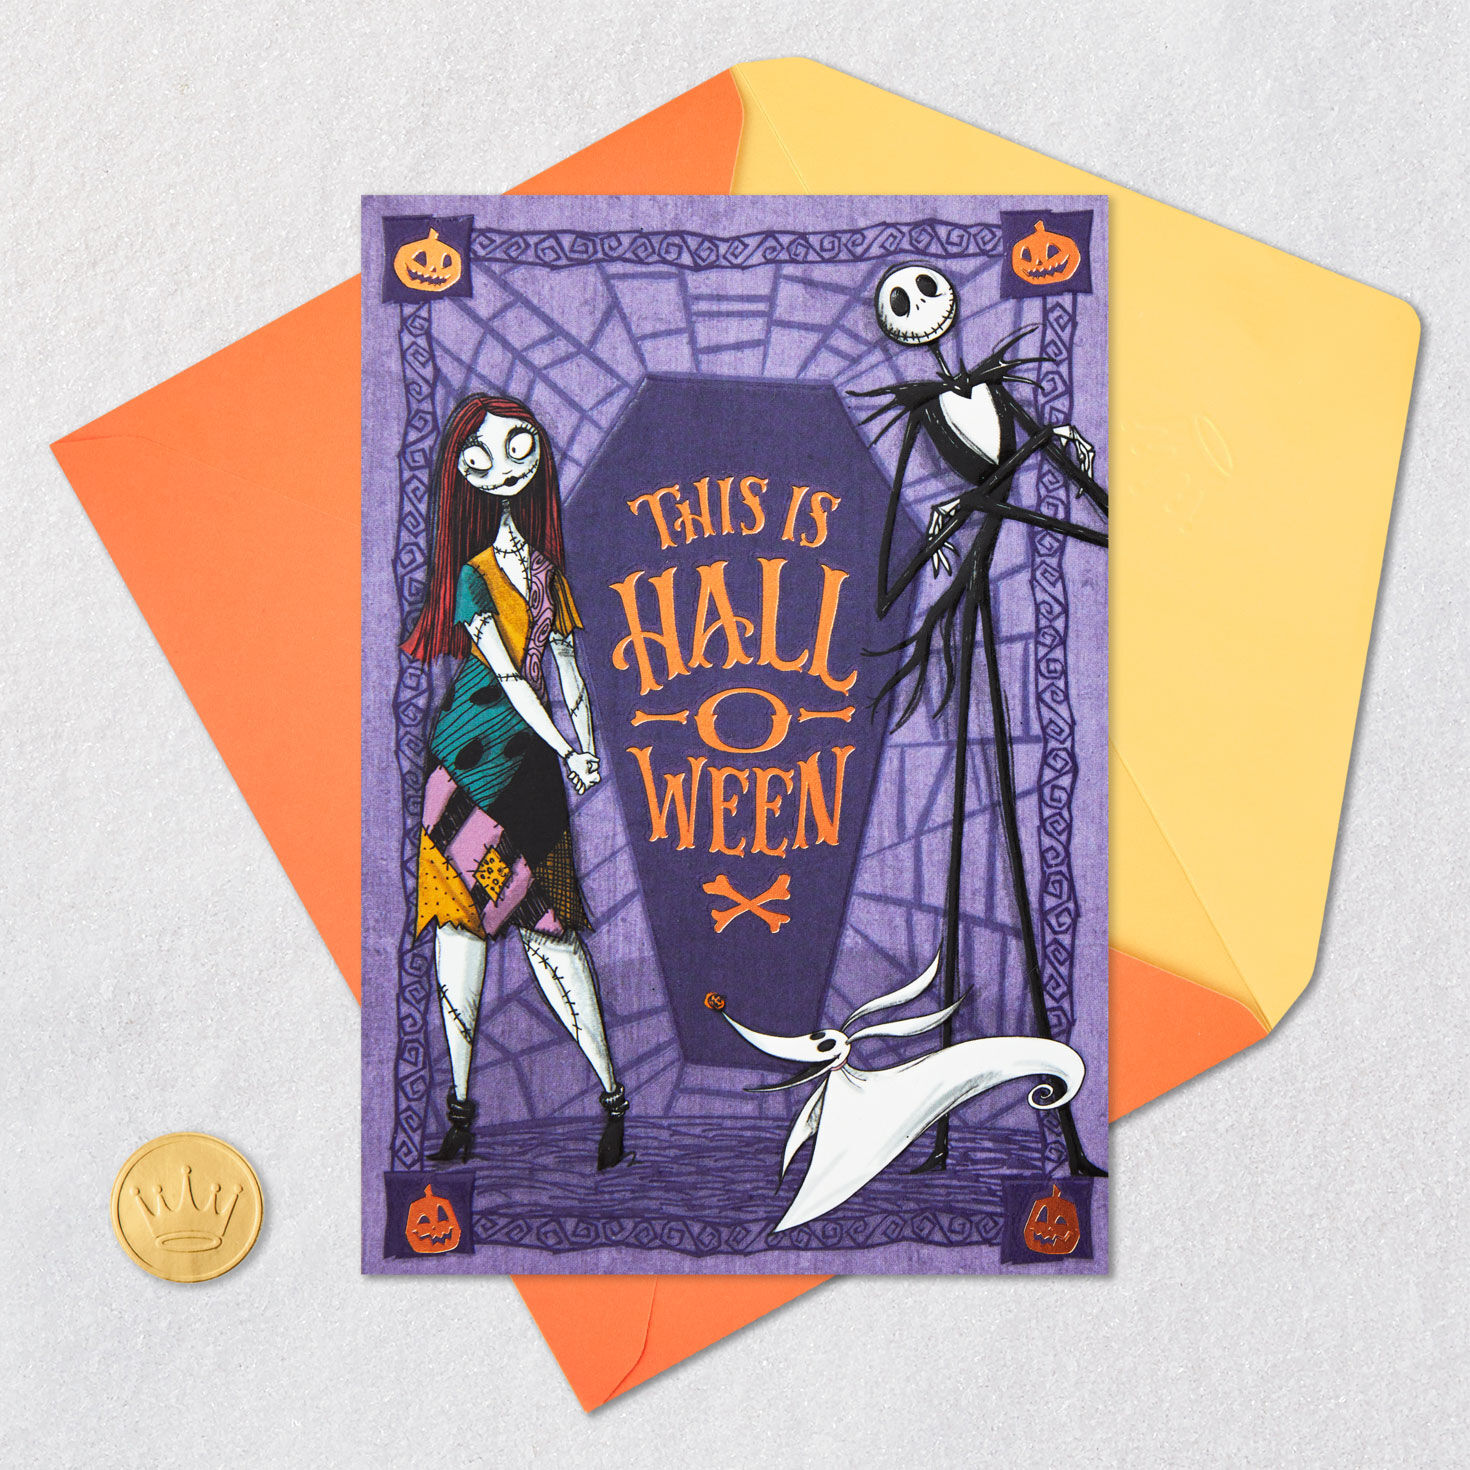 Disney Tim Burton's The Nightmare Before Christmas A Scream Halloween Card for only USD 3.99 | Hallmark